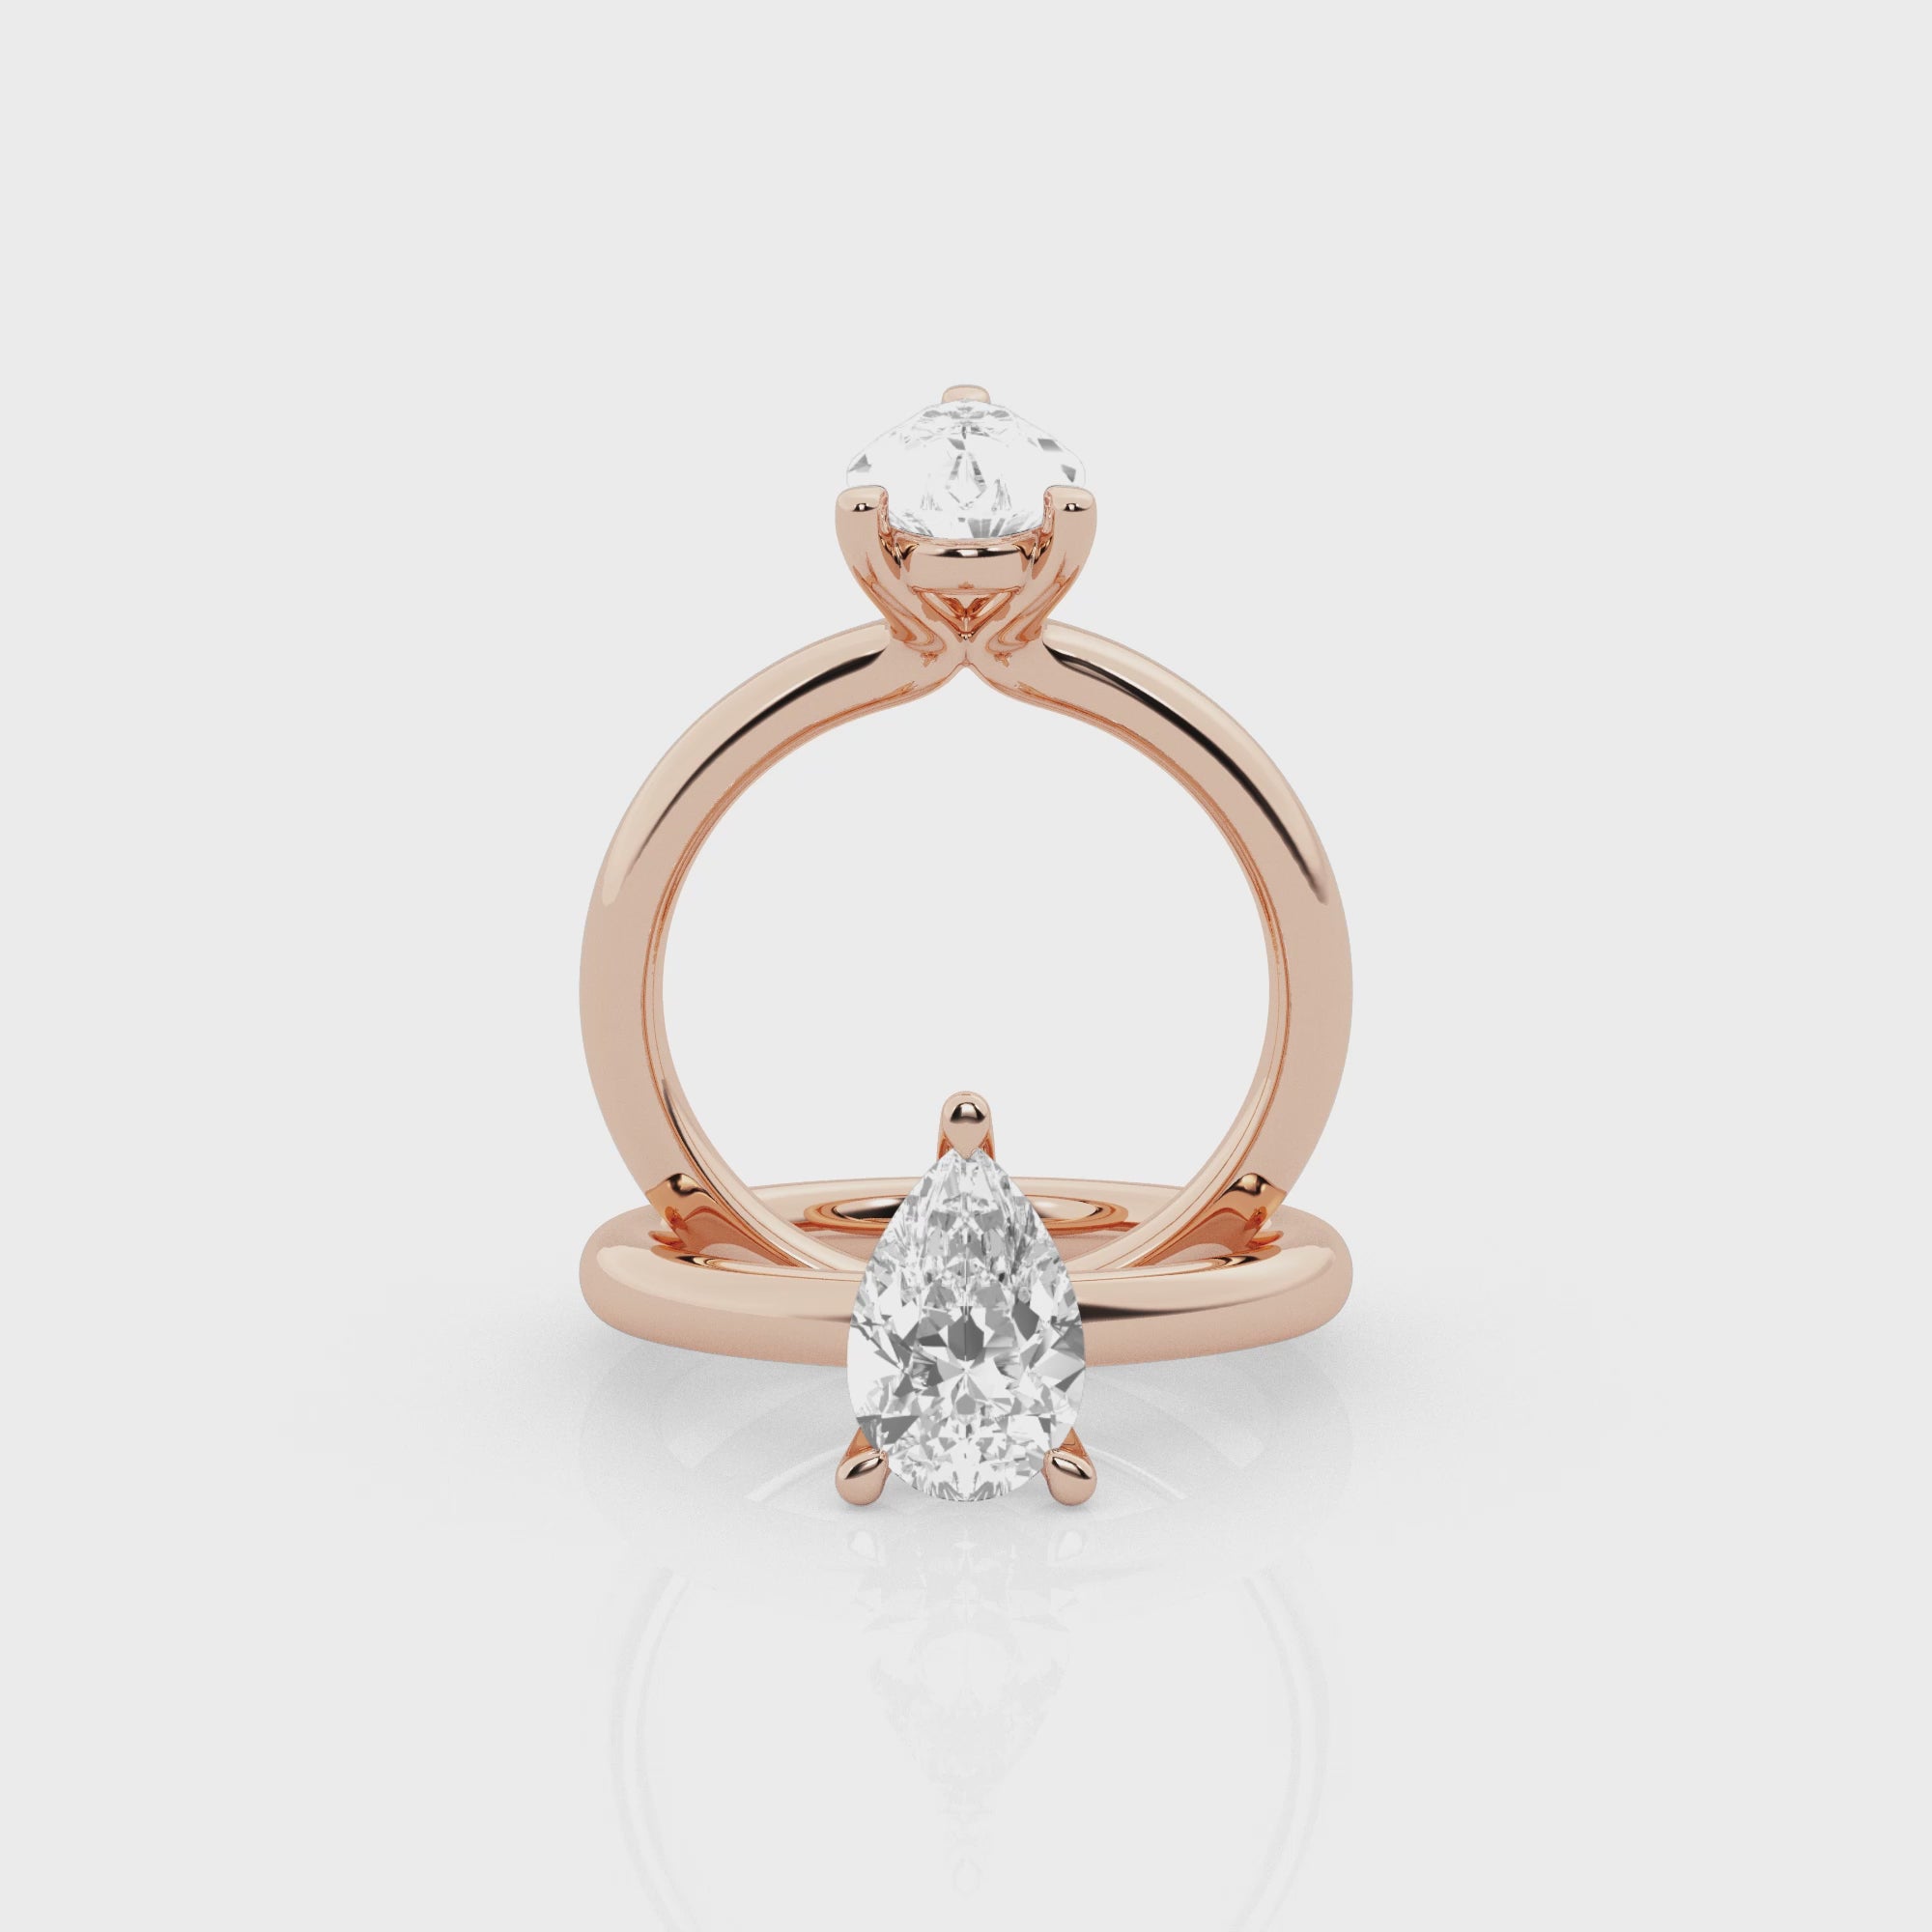 2 carat Pear Solitaire Diamond Ring